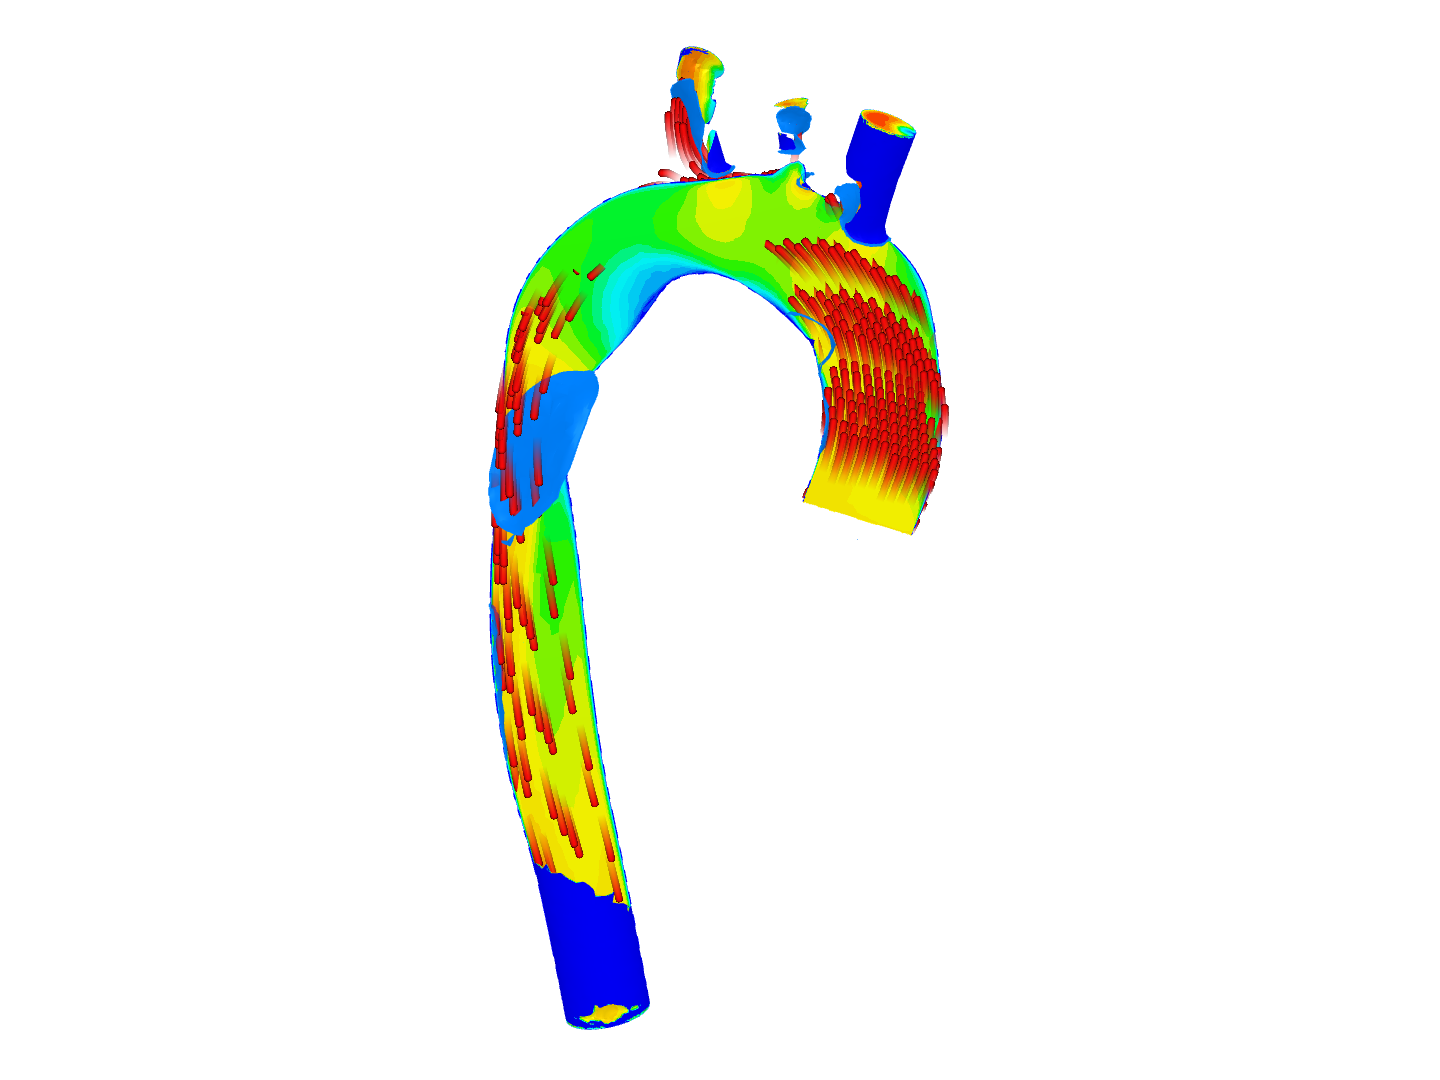 Final aorta image